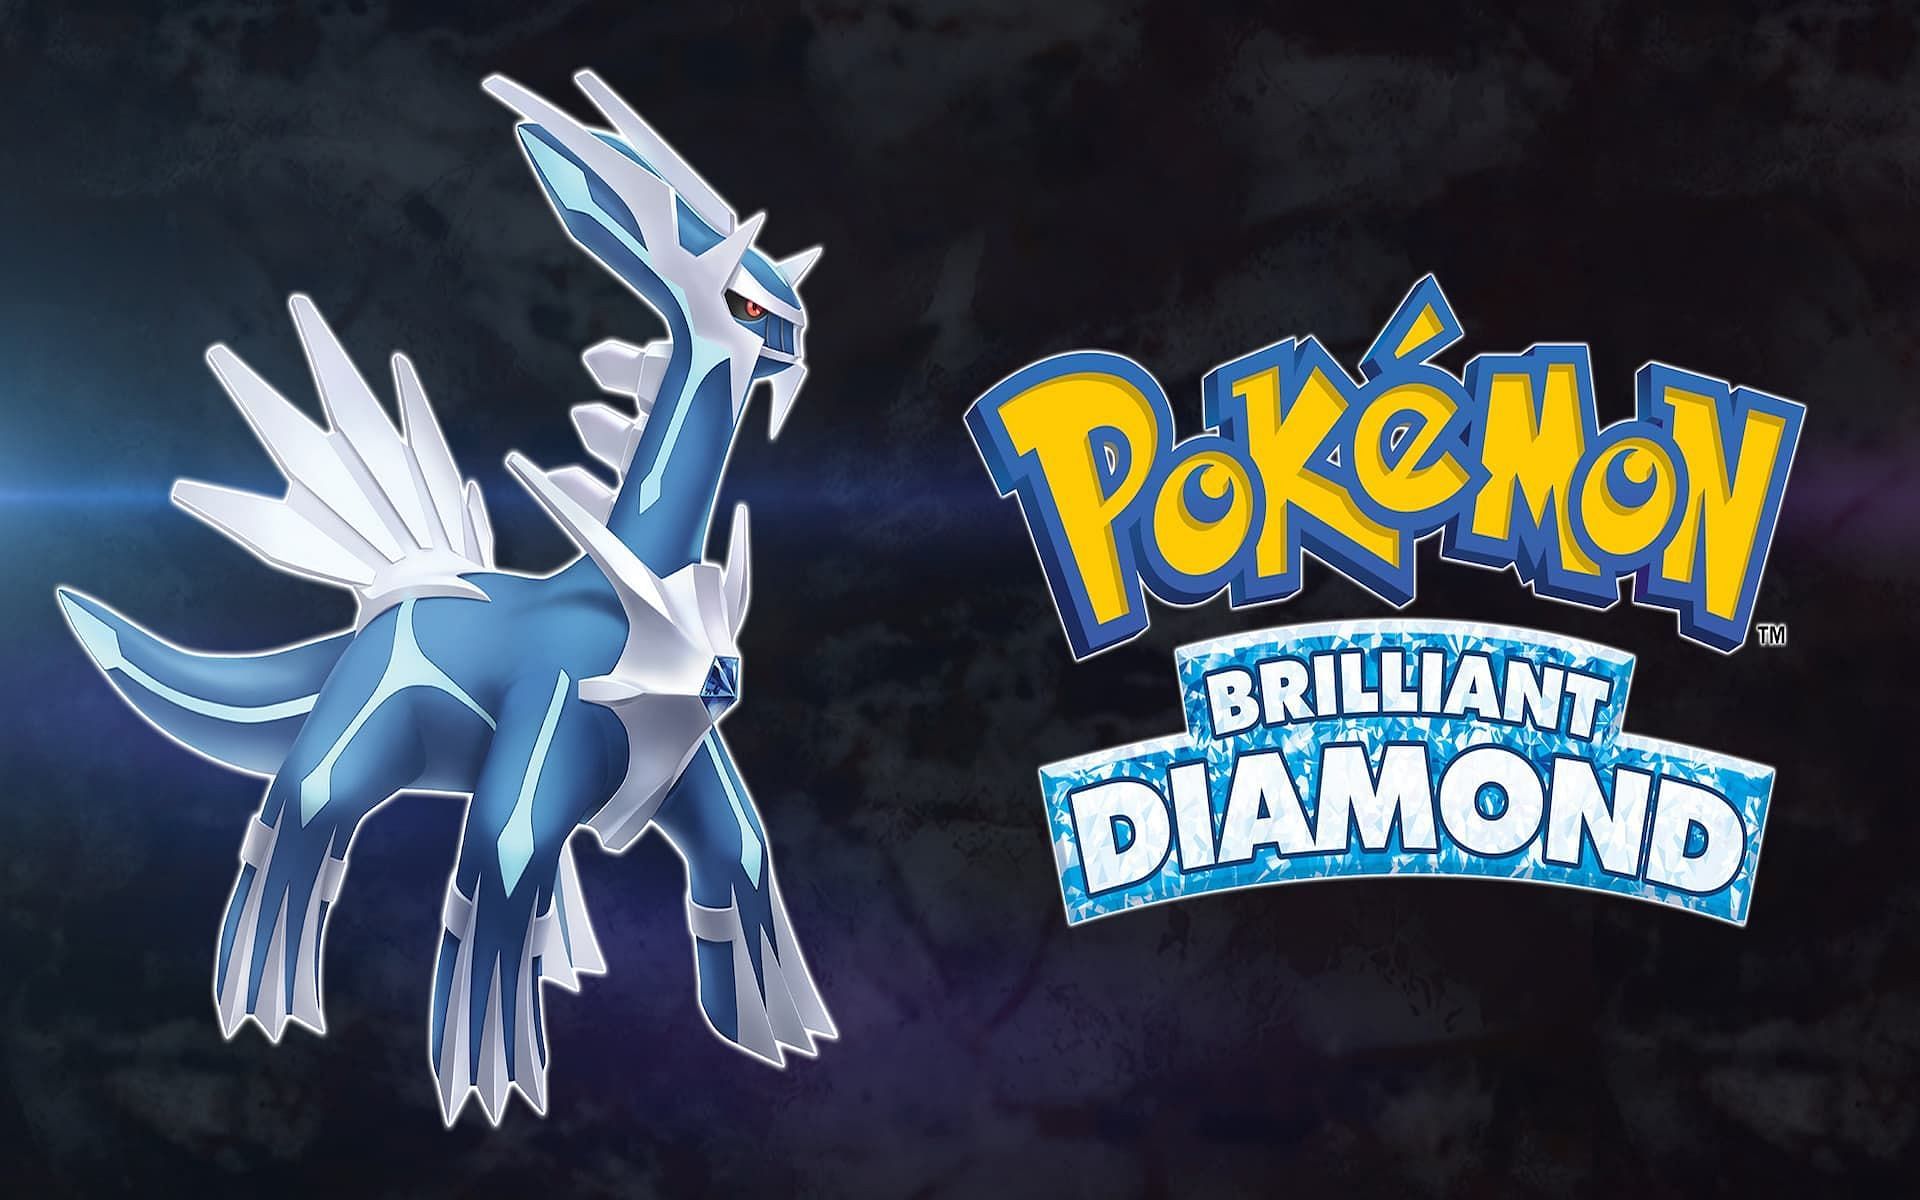 Pokémon exclusive to Brilliant Diamond or Shining Pearl versions